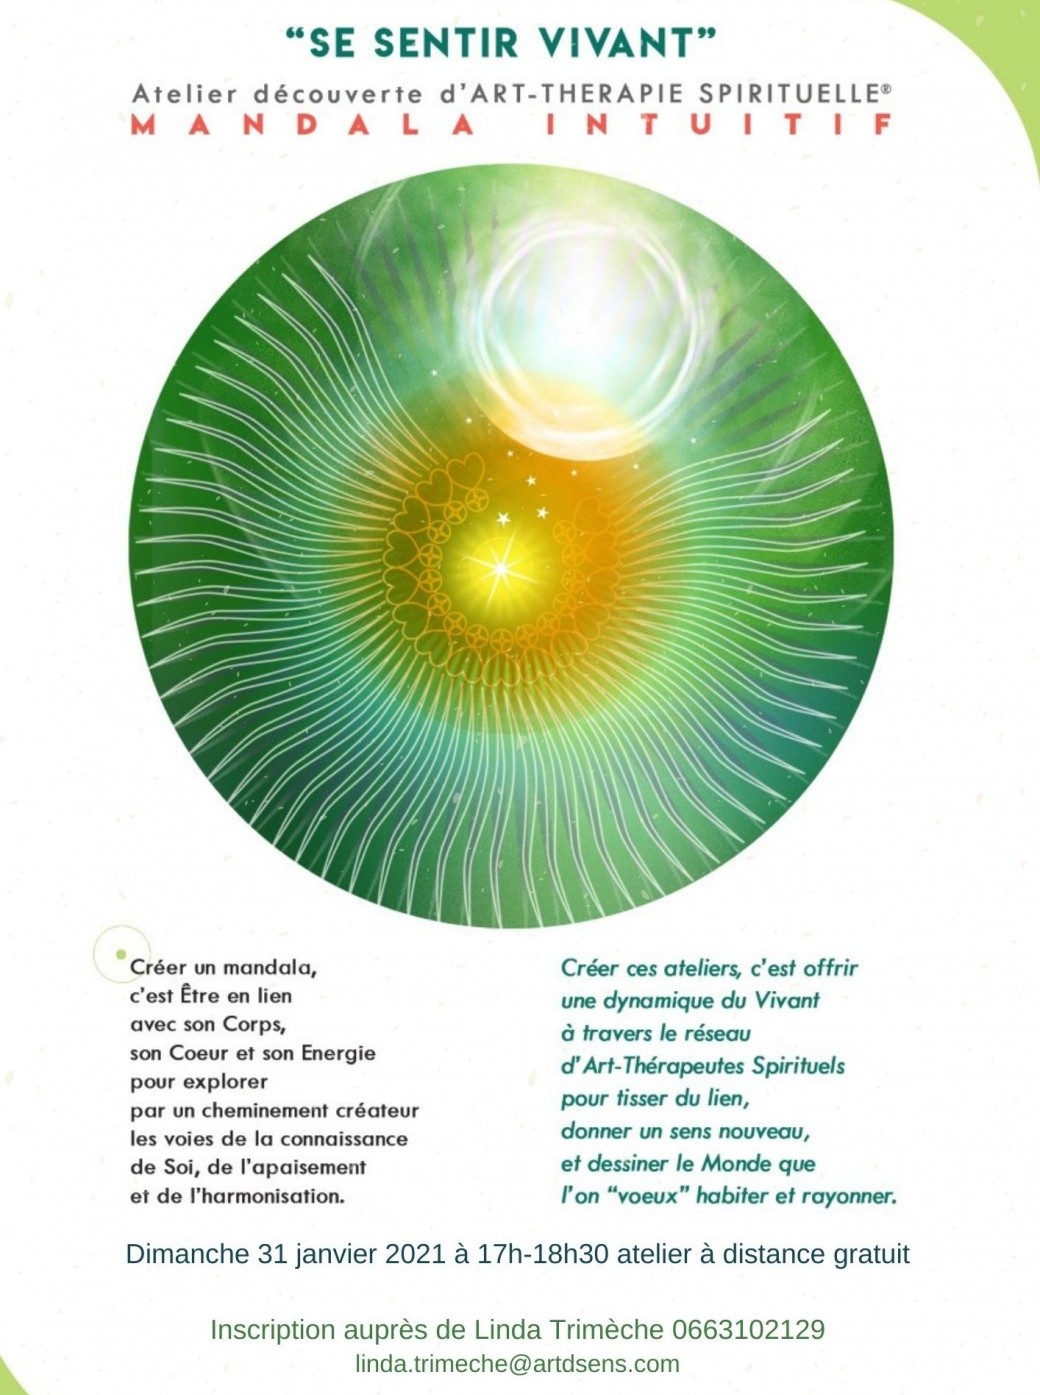 Mandala intuitif - Se sentir vivant